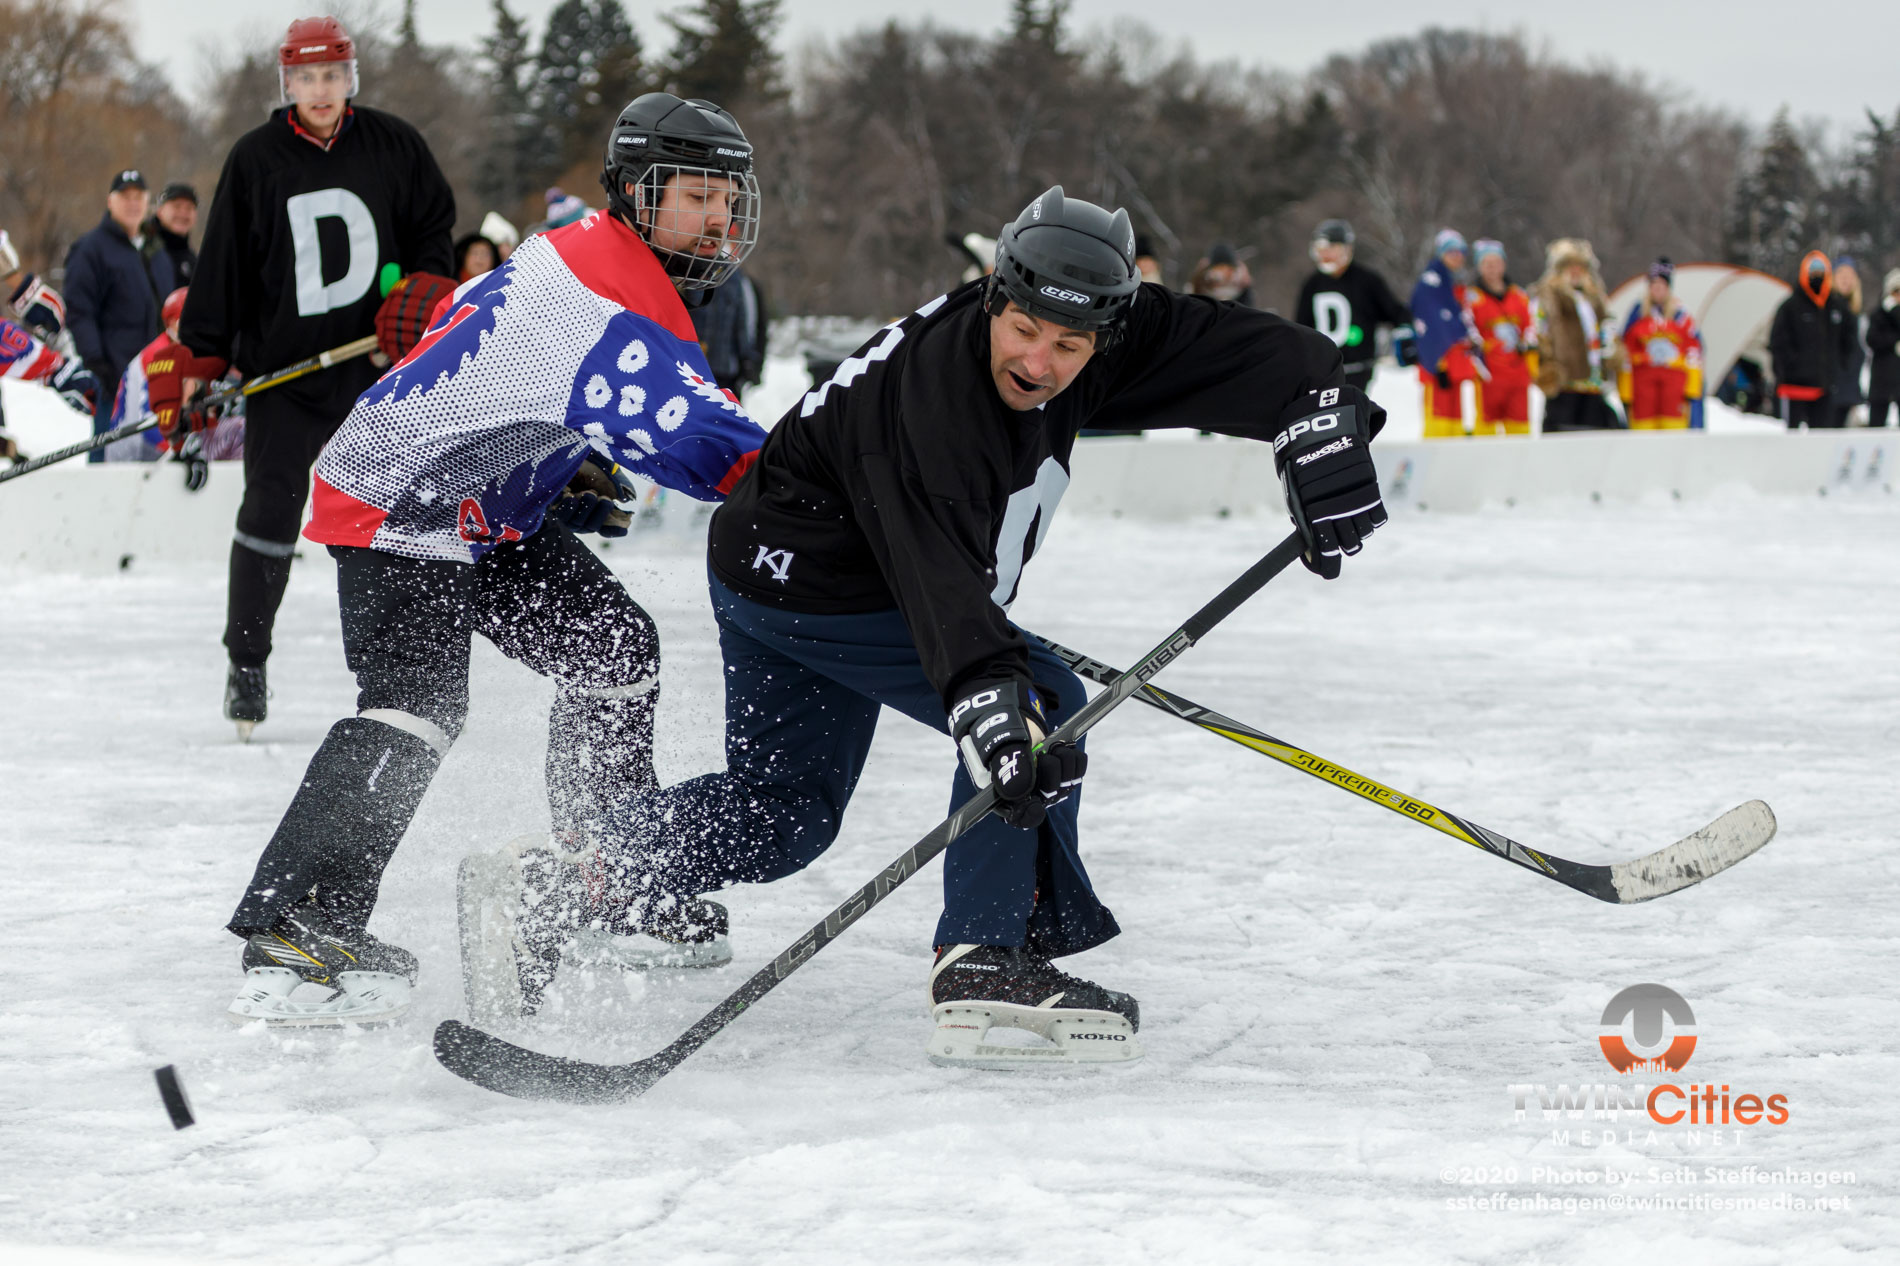 January 25, 2020 - Minneapolis, Minnesota, United States - Scenes from the U.S. Pond Hockey Championships on Lake Nokomis. 

(Photo by Seth Steffenhagen/Steffenhagen Photography)